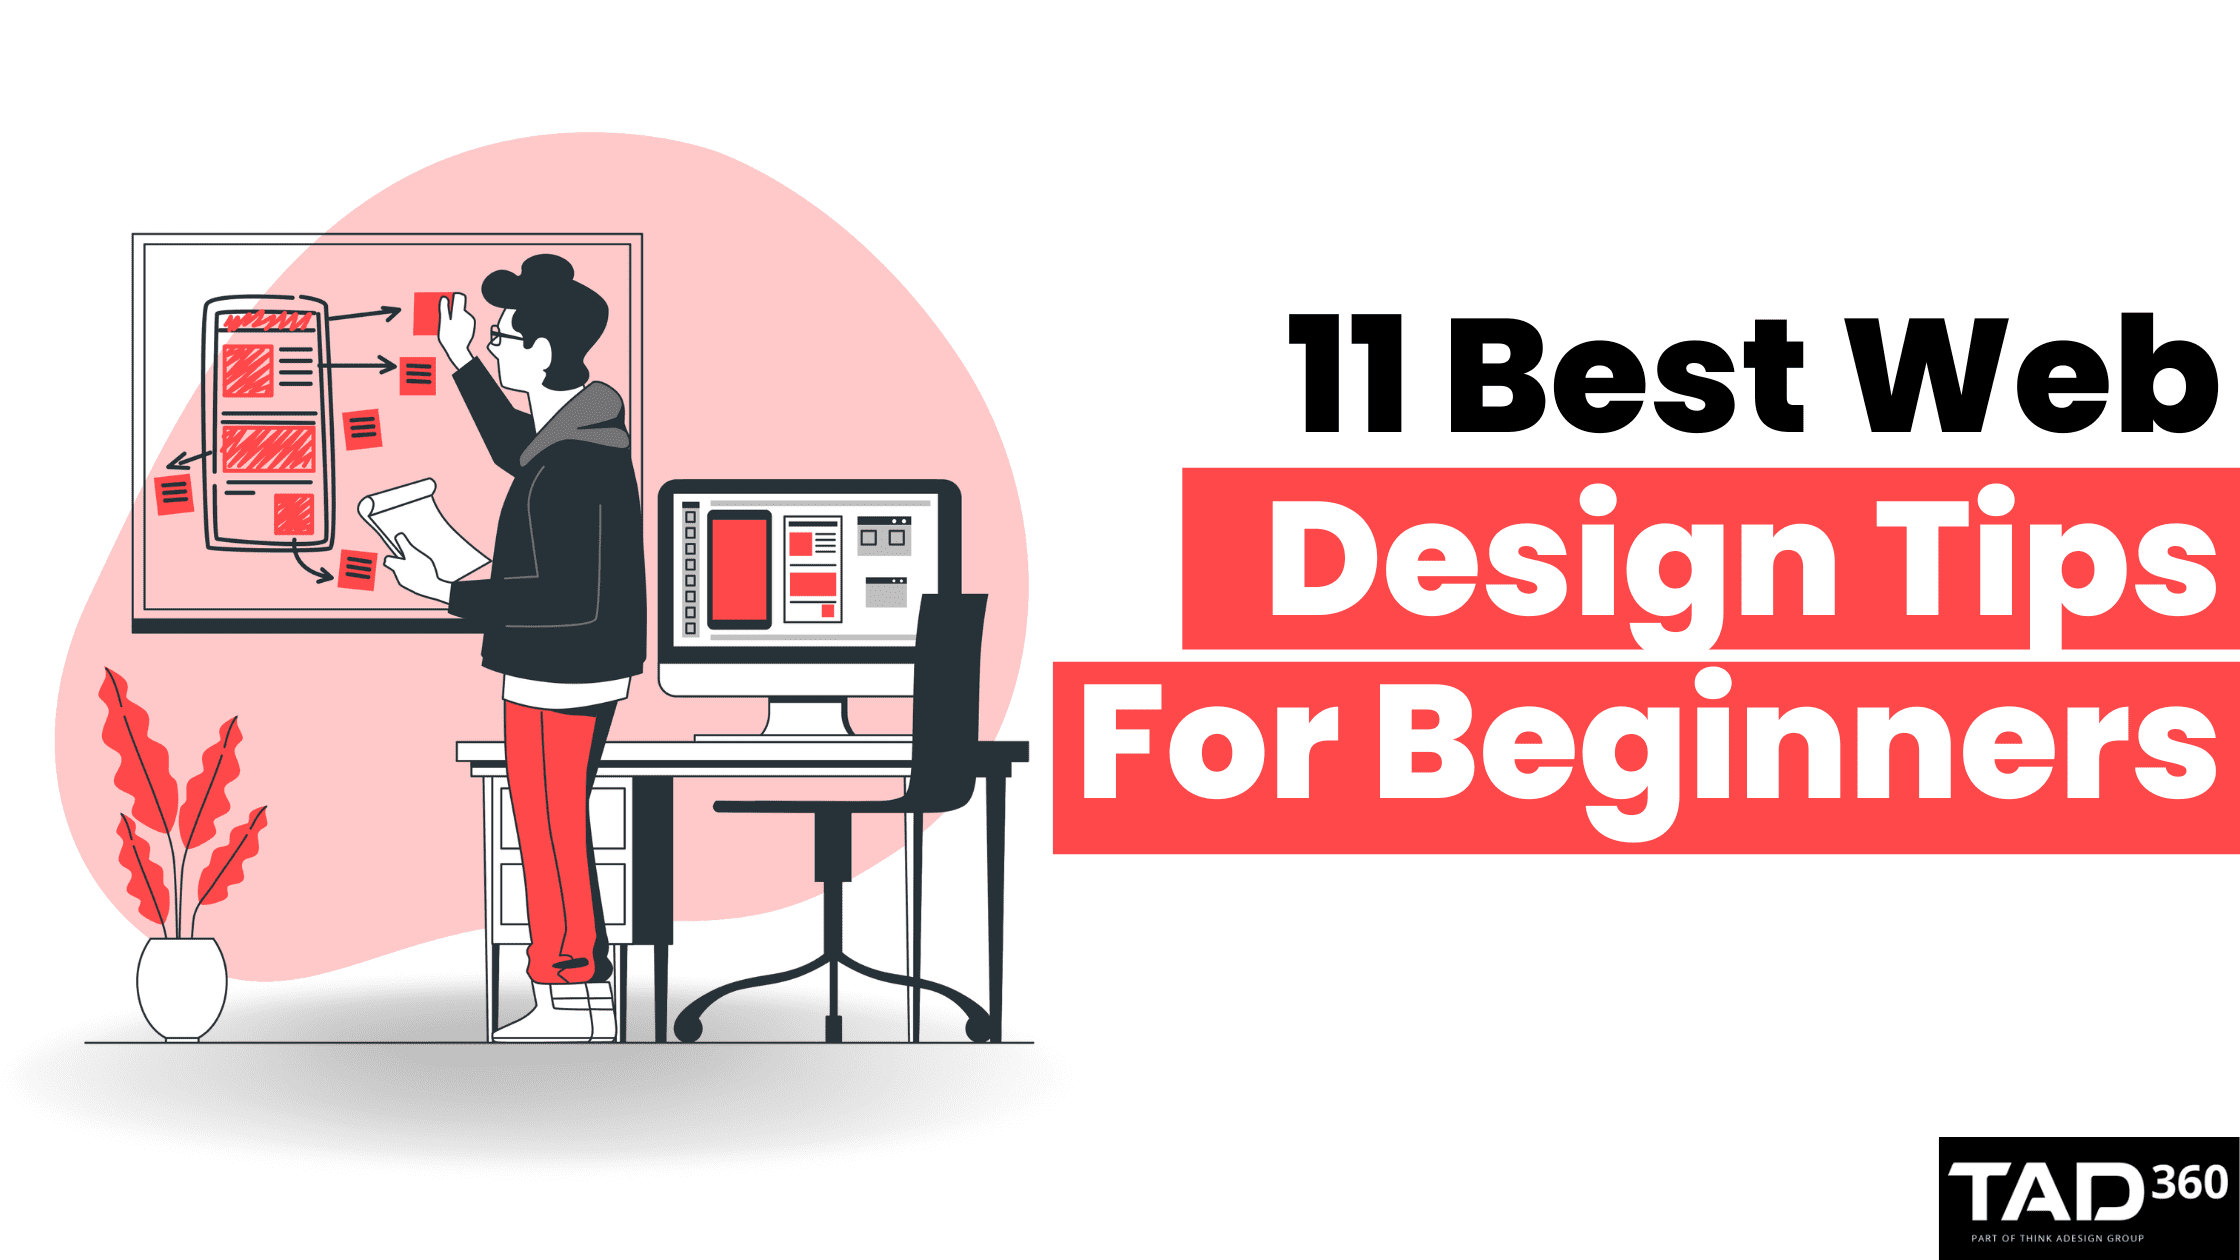 11 Best Web Design Tips For Beginners By Expert Deisgners